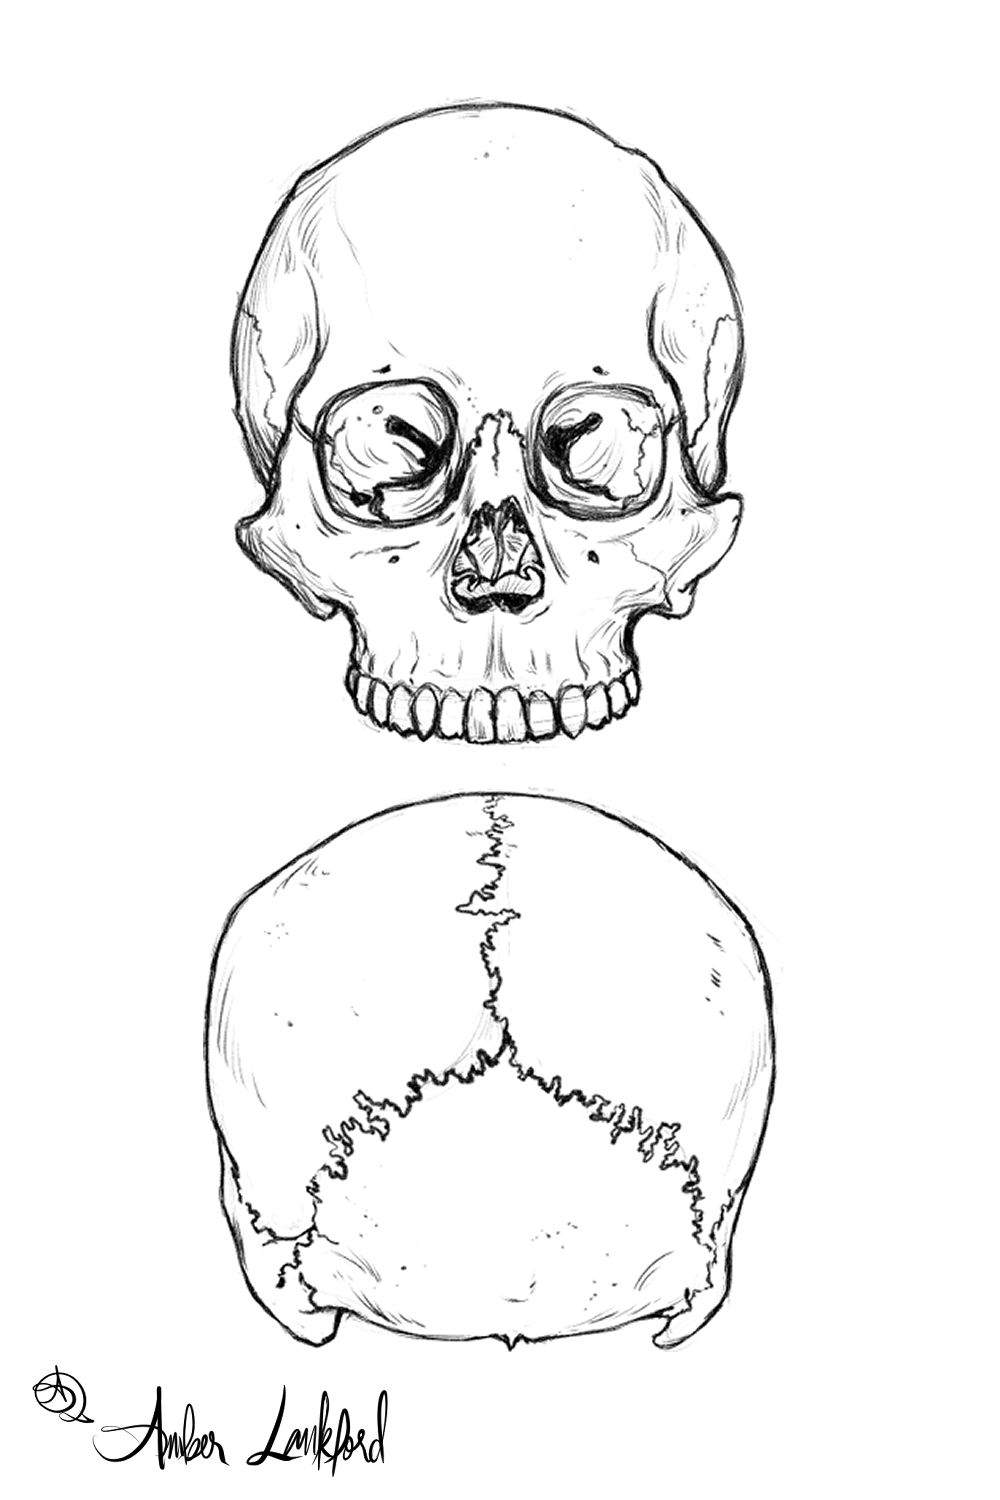 Skull, Anterior and Posterior views